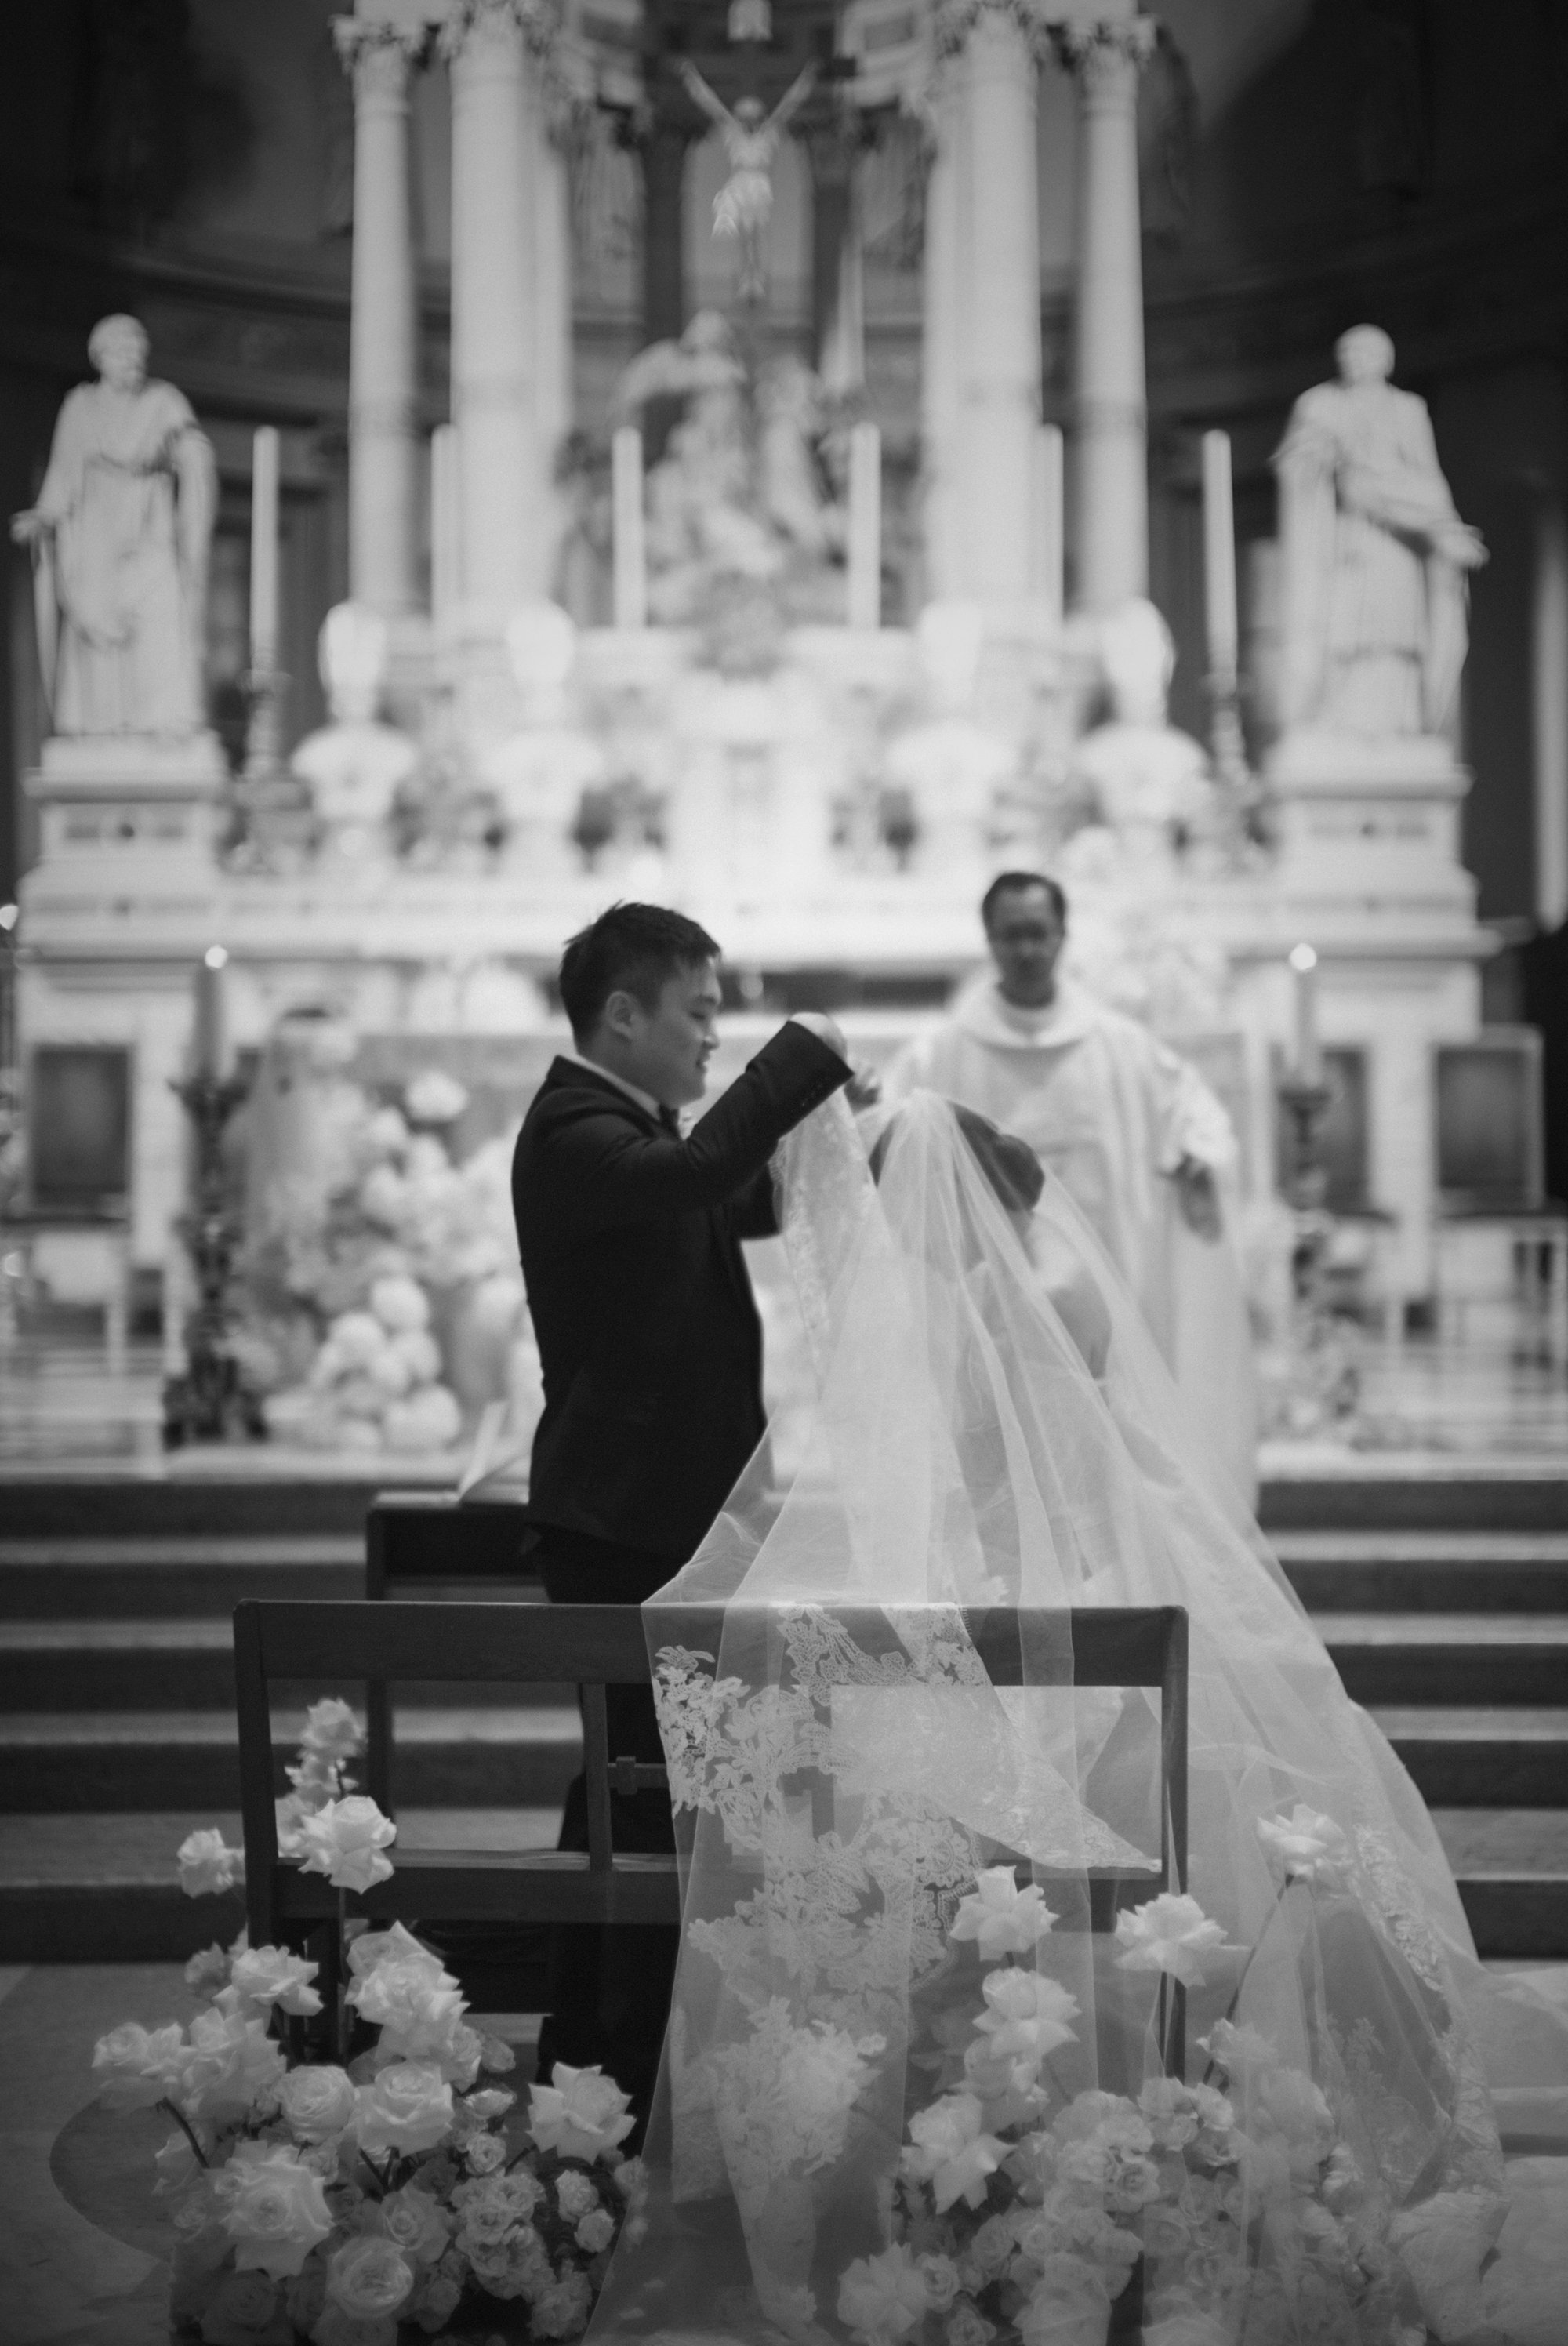 Prawira-Evelyn-Dolomites-Italy-Santre wedding-Yefta Gunawan-Jeriko MUA-Carol Kuntjoro Photography-55.jpg